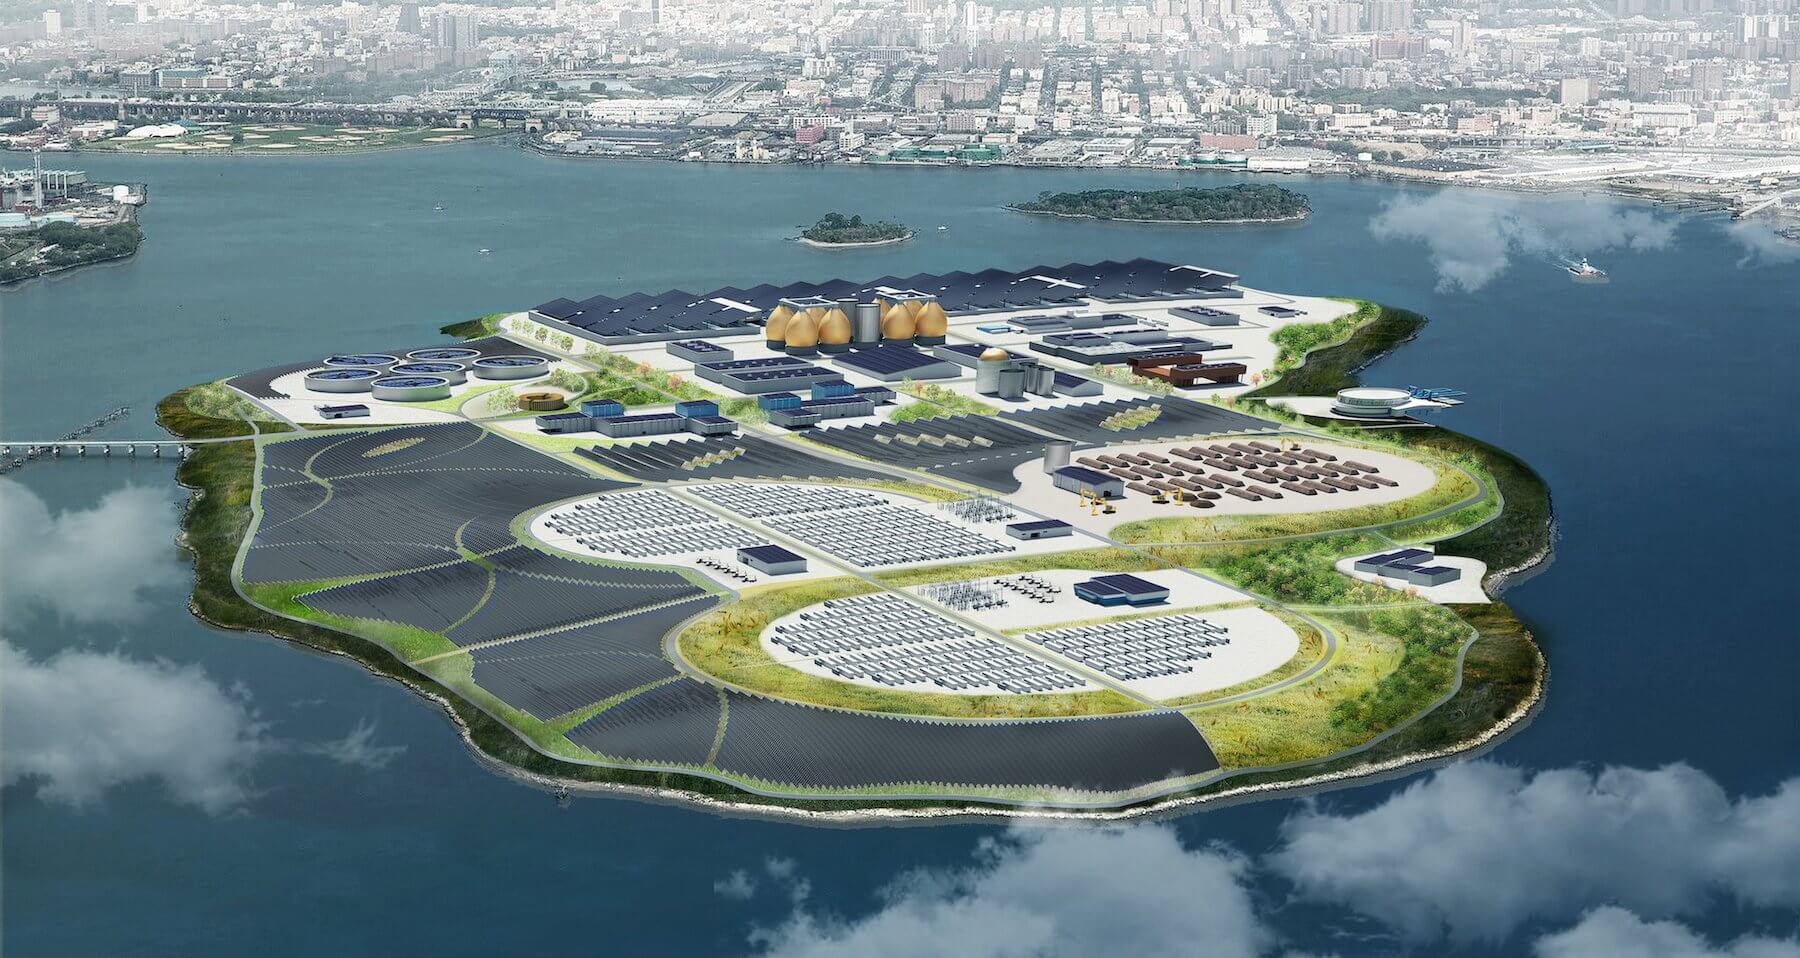 Regional Plan Association and RISD reimagine NYC’s Rikers Island